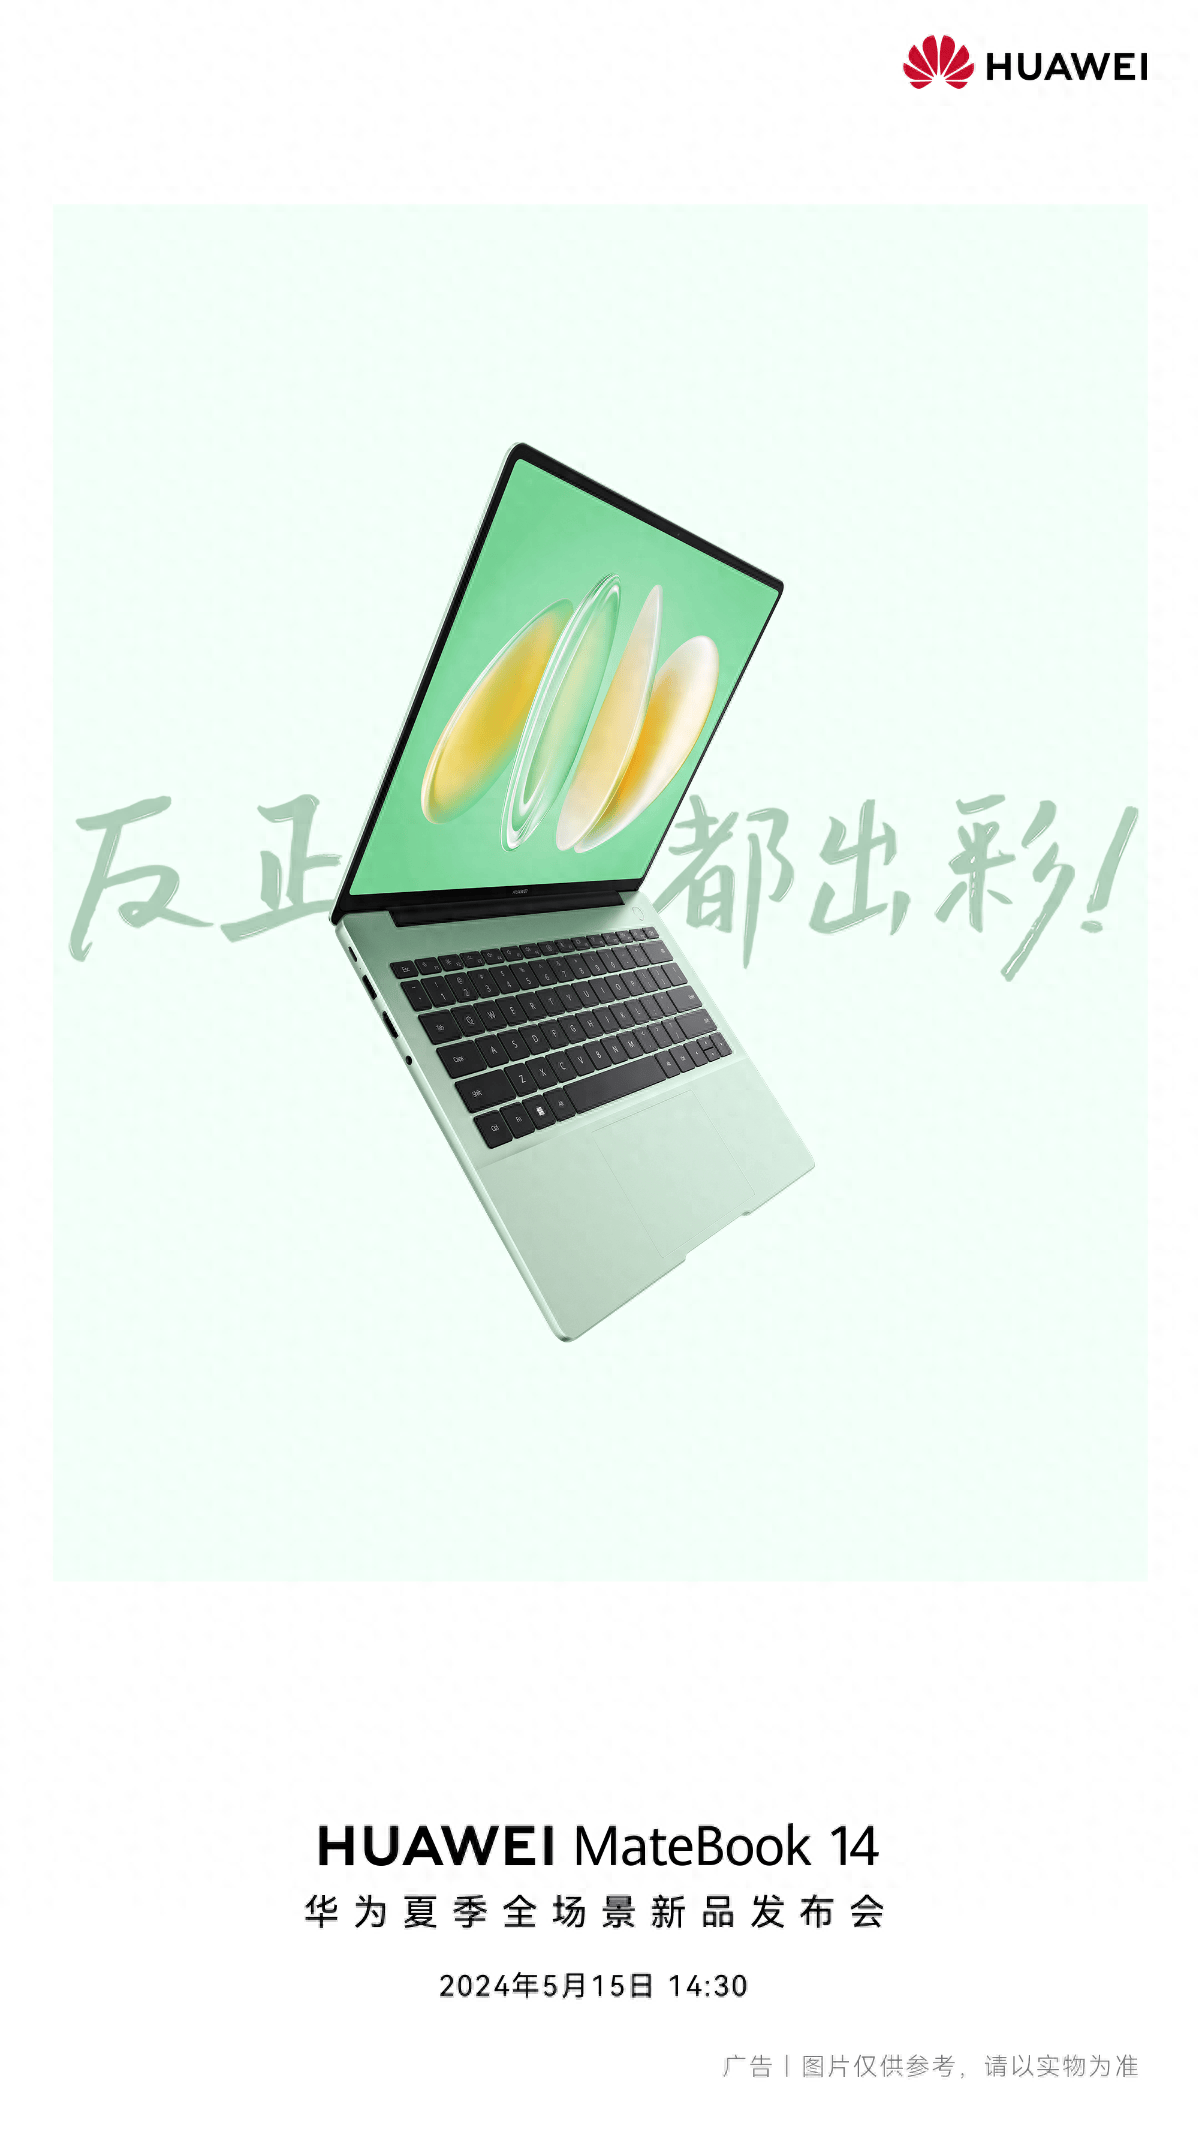 New Huawei MateBook 14